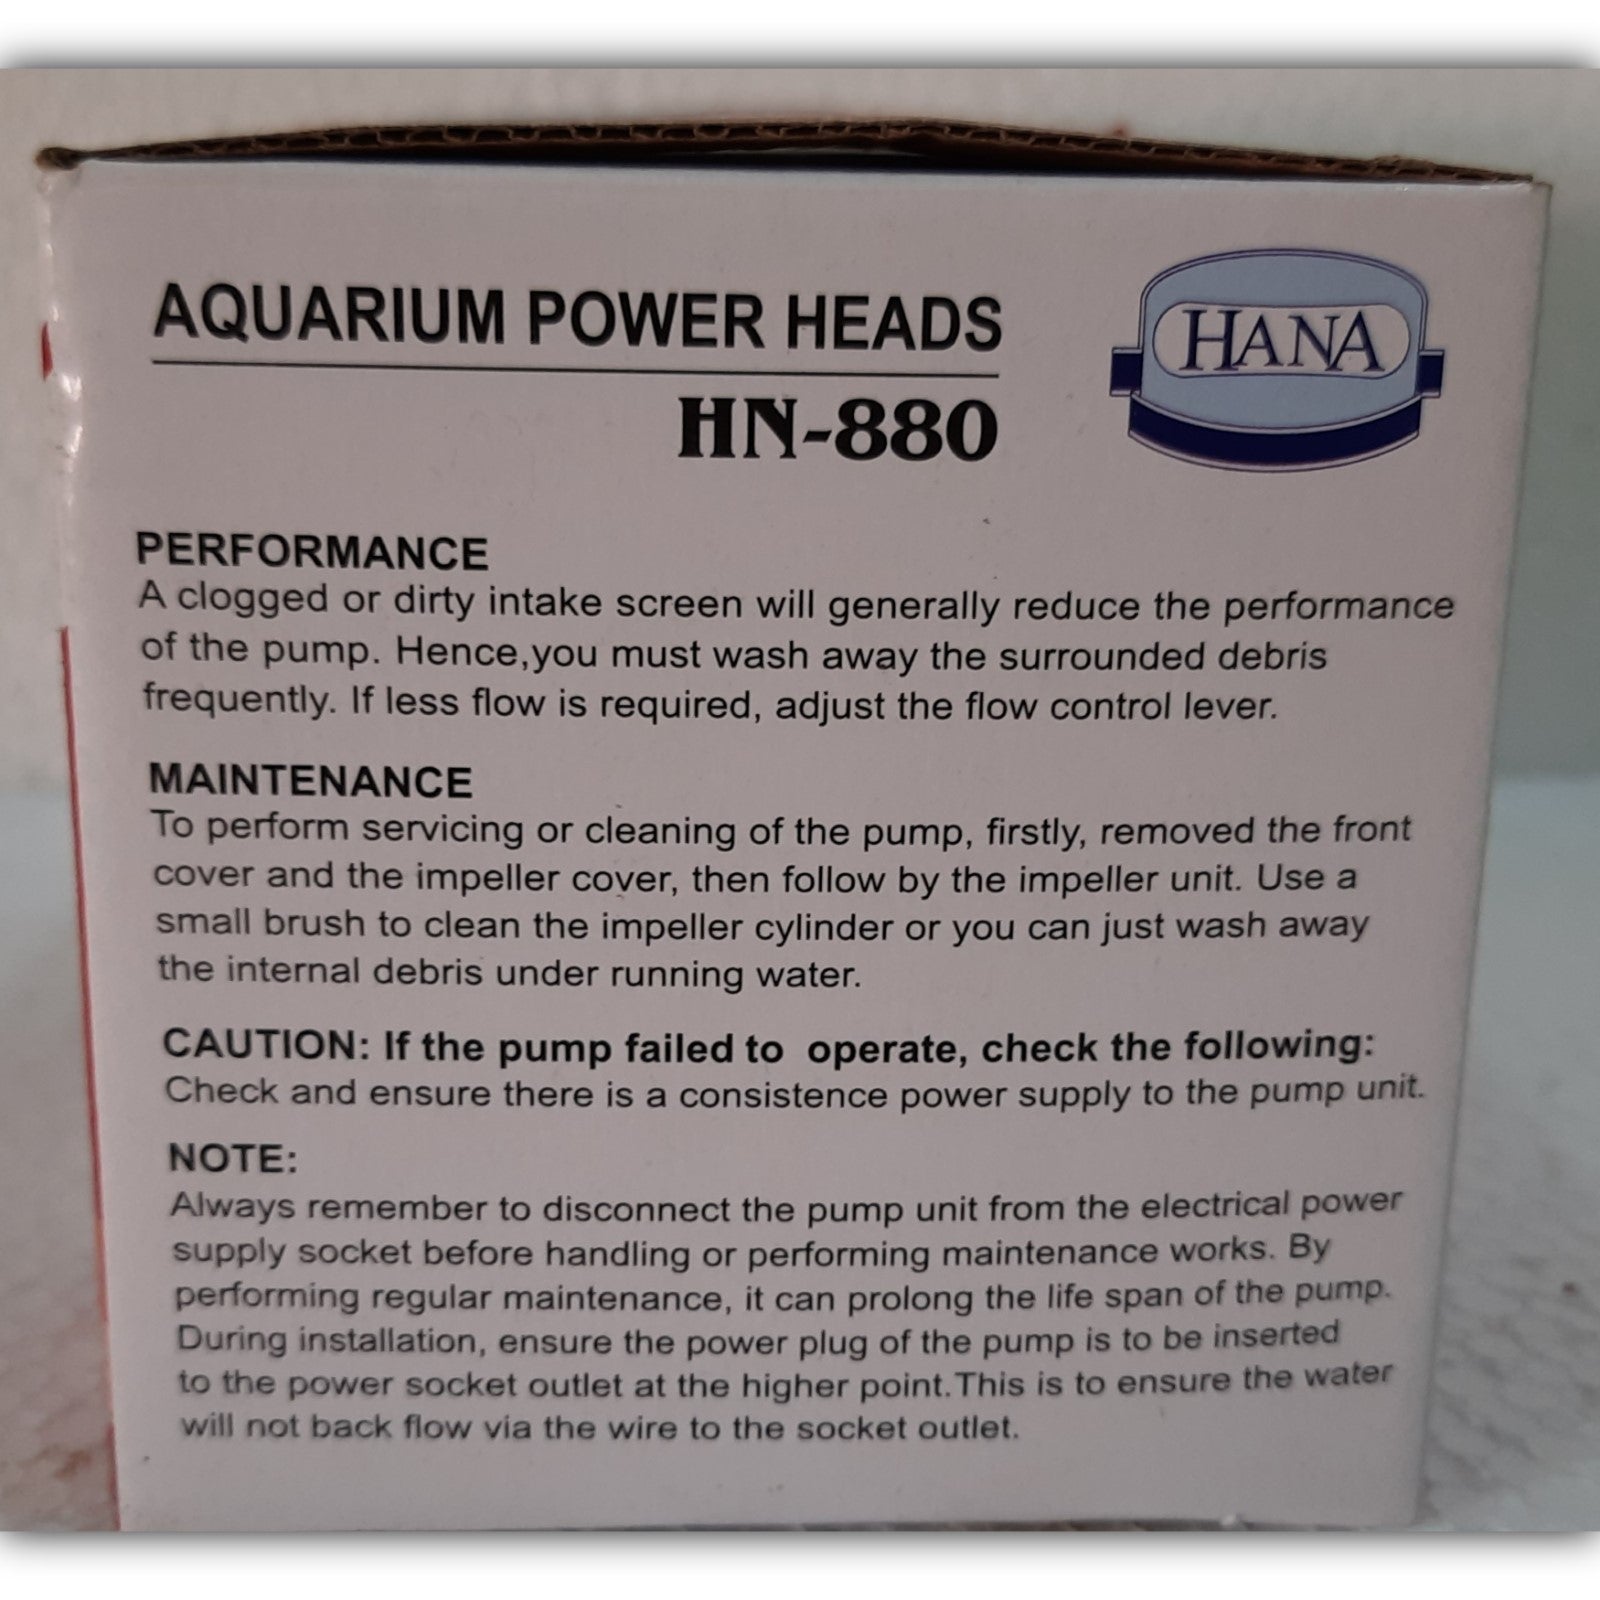 Hana Power Head HN-880